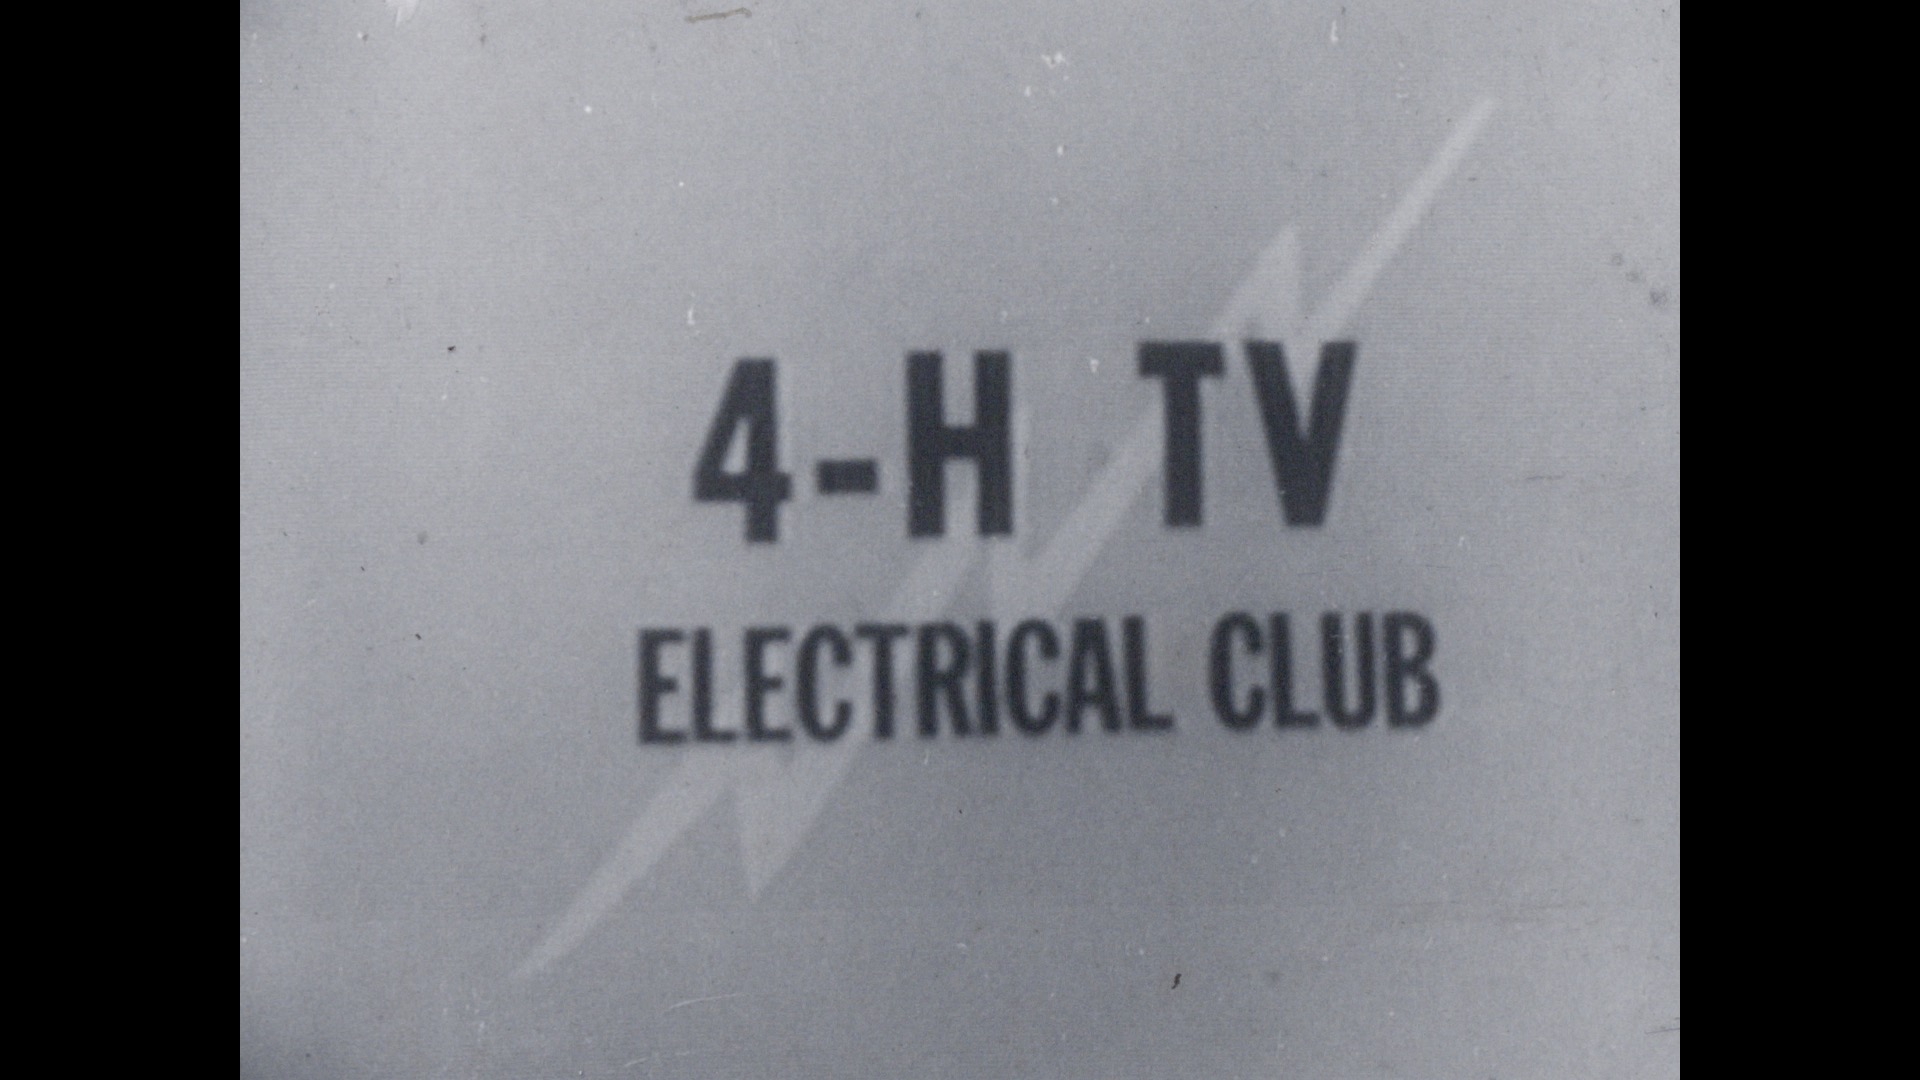 4-H TV Electrical Club, circa 1957